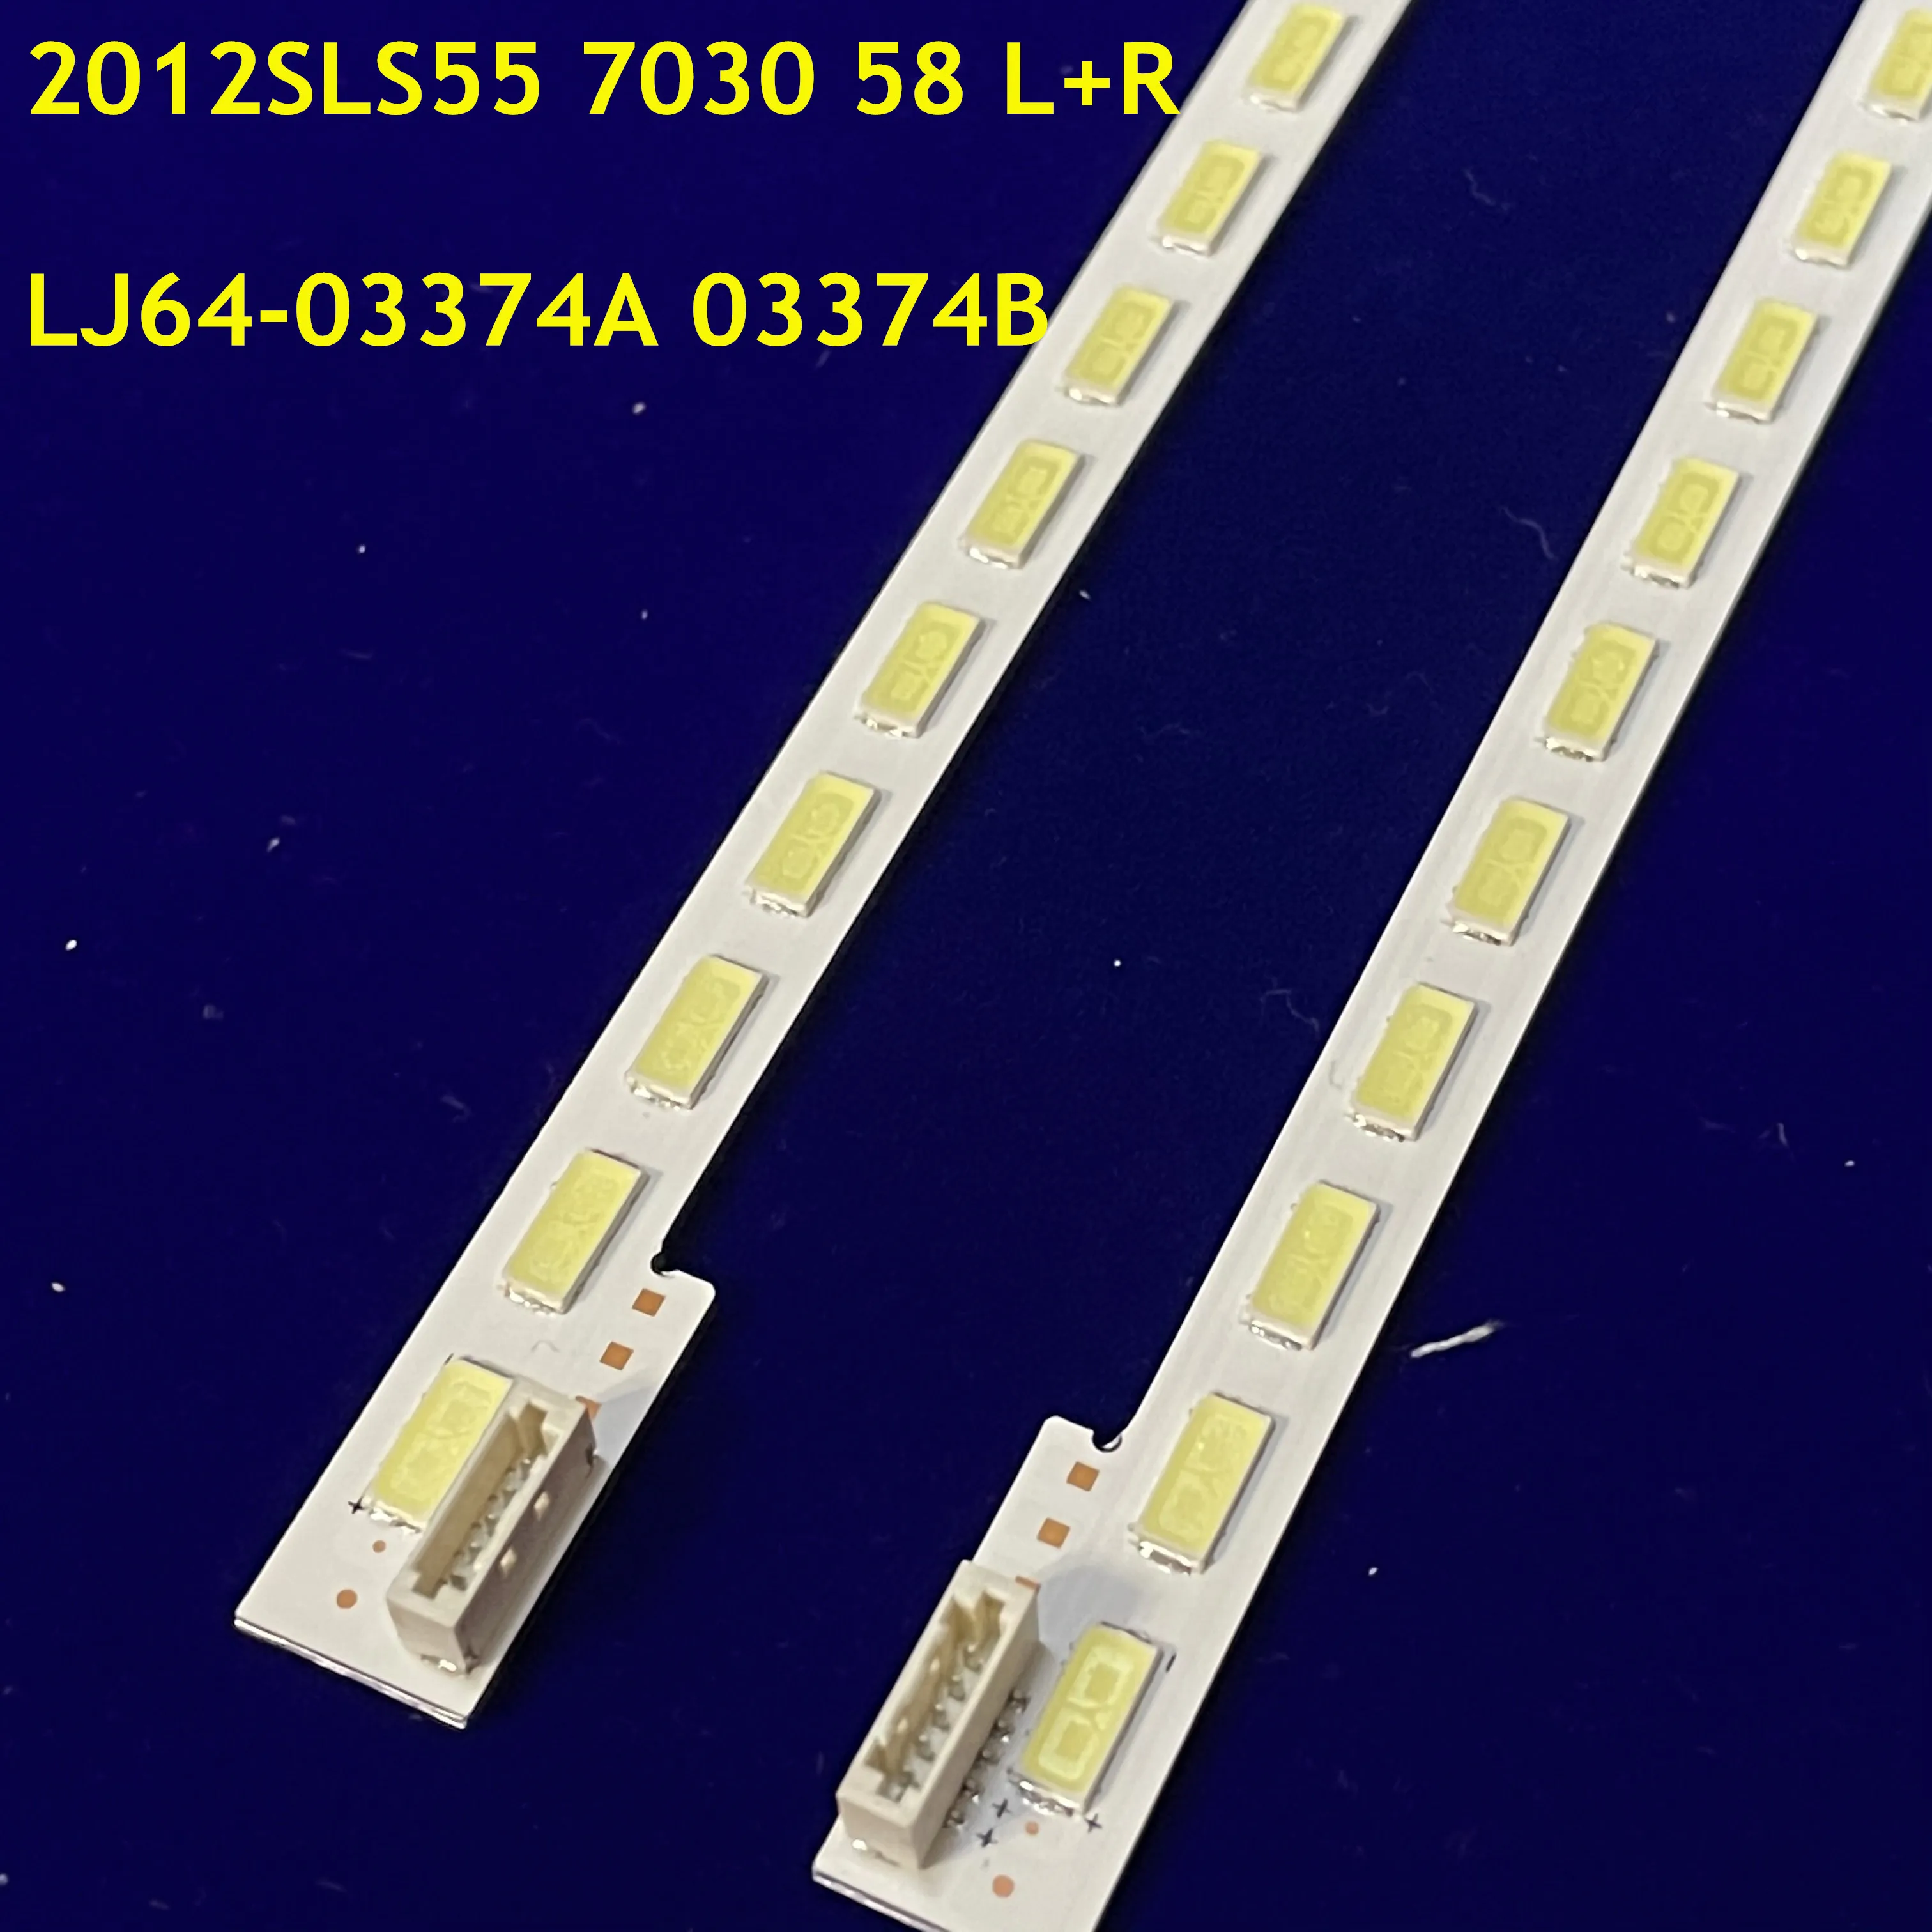 10pcs LED Backlight Strip for KDL-55HX755 KDL-55HX750 KDL-55EX640 KLV-55EX630 KLV-55EX630 2012SLS55 7030 58 L R LJ64-03374A